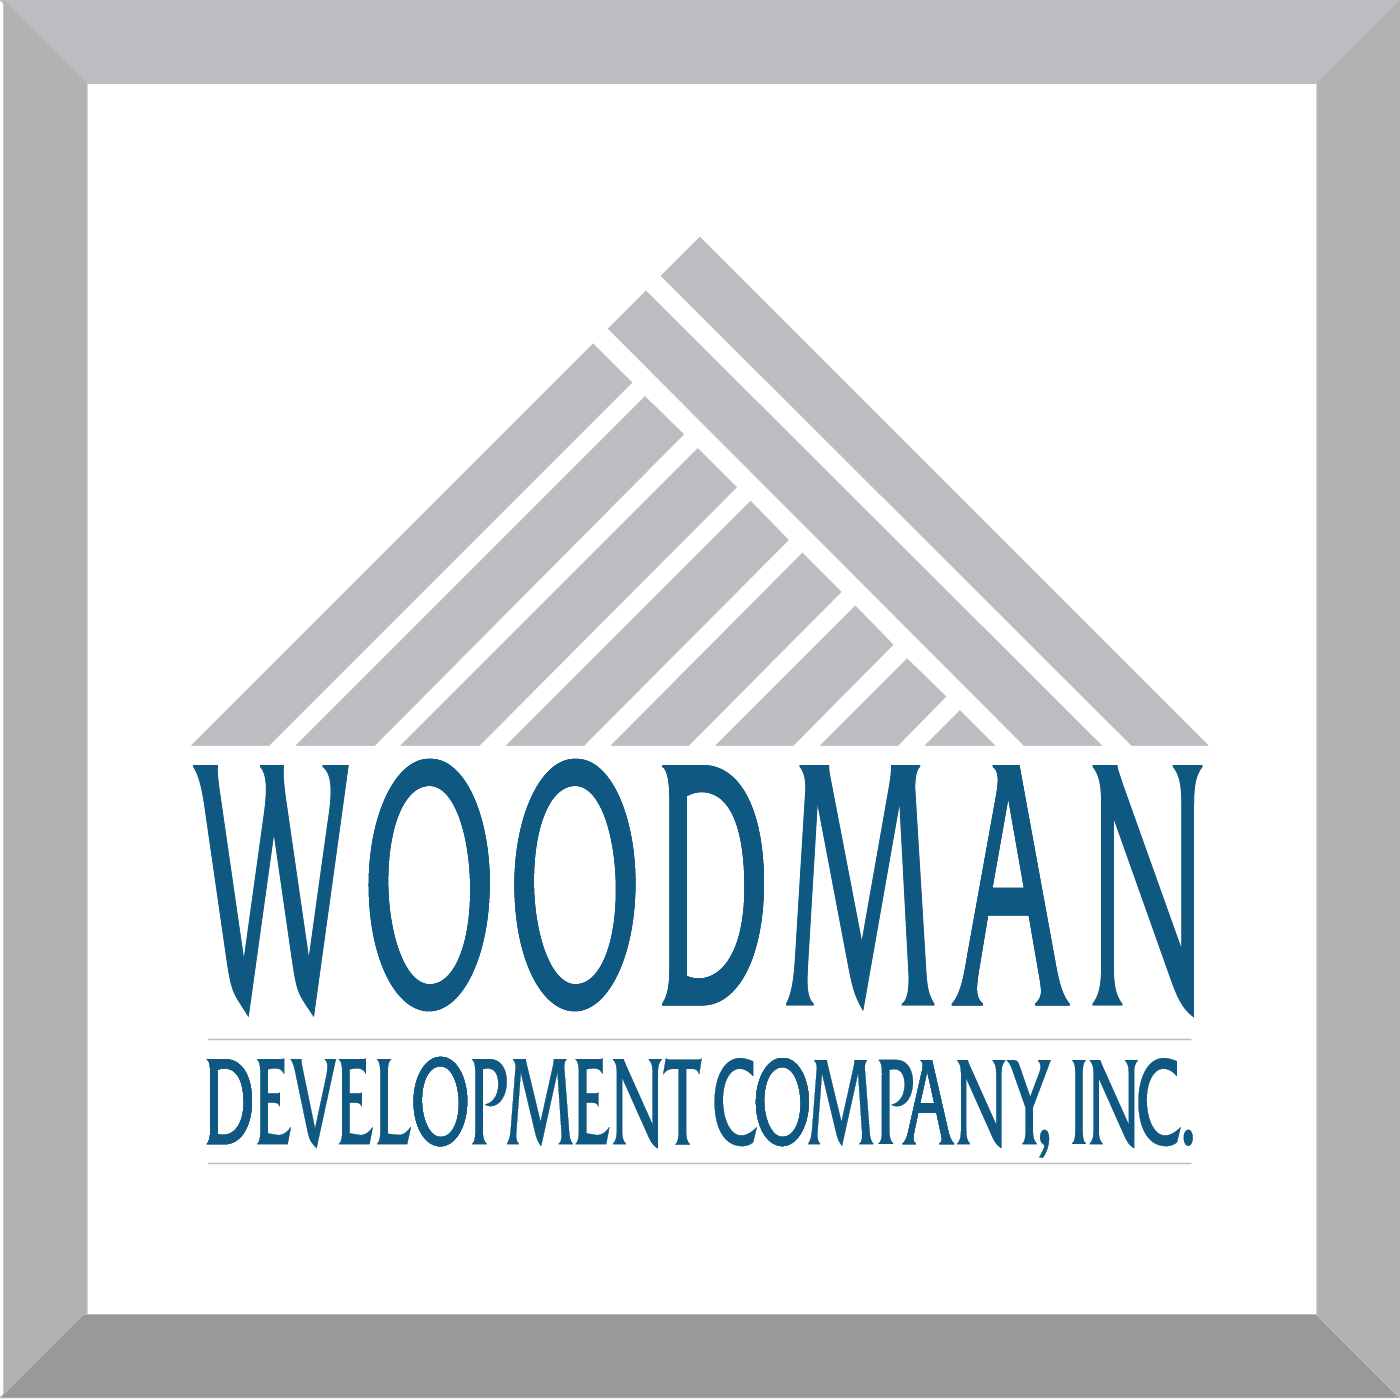 Woodman Development Company